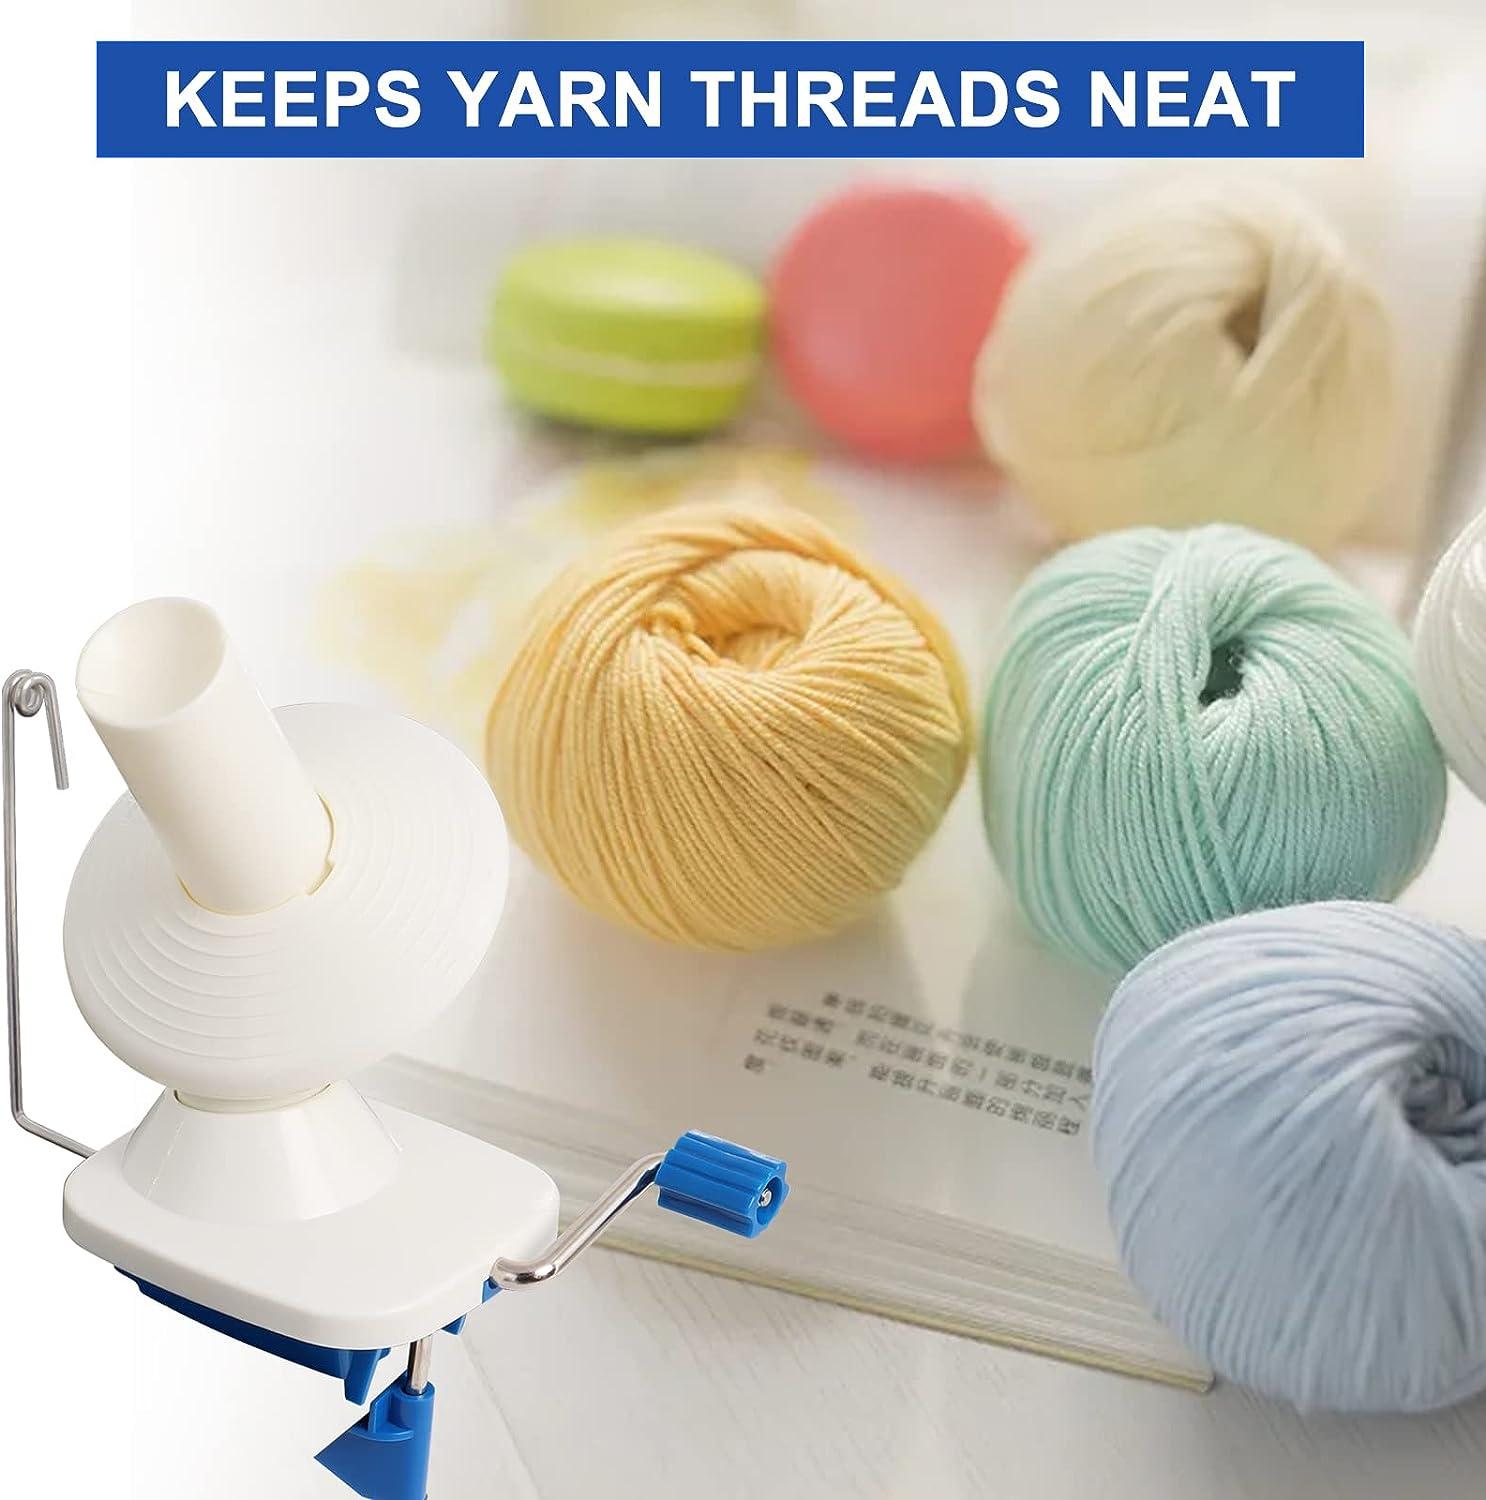 YaeTek Hand-Operated Yarn Ball Winder - Manual Wool Winder Holder for Swift  Yarn Fiber String Ball